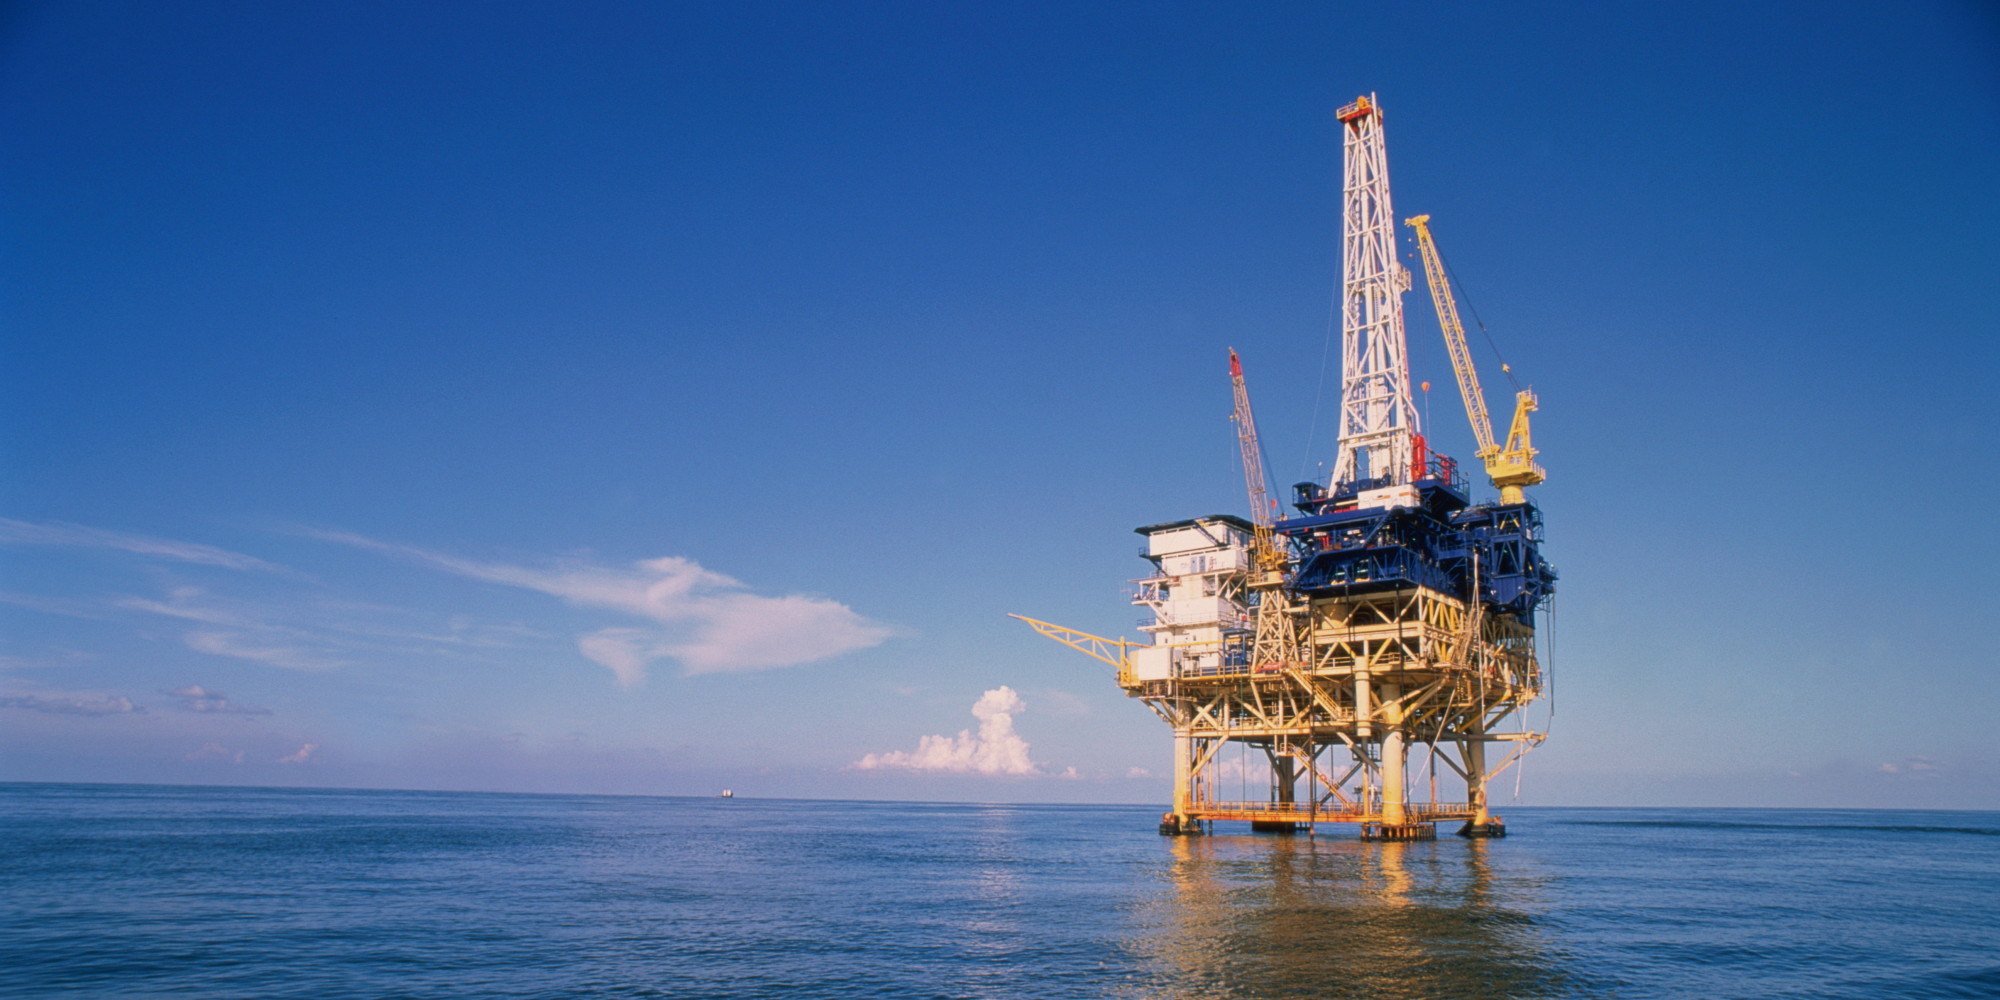 Offshore Oil Exploration in the Atlantic? Bad Idea | HuffPost